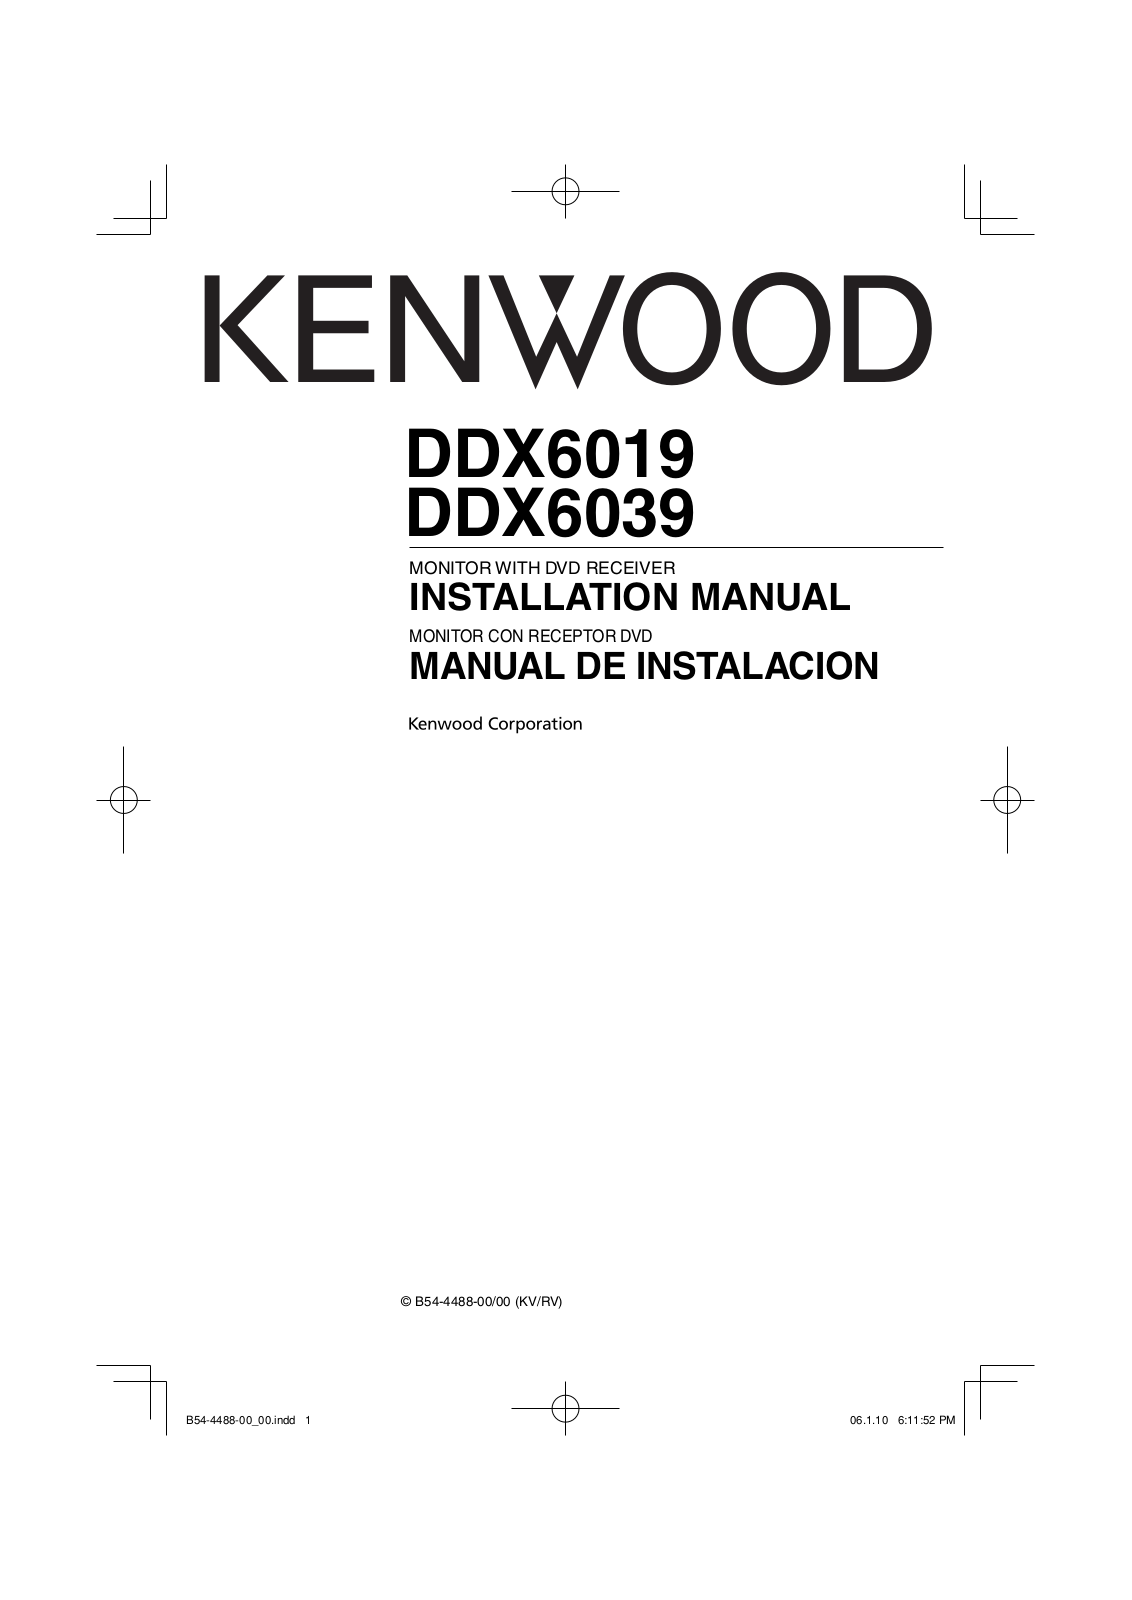 Sony DDX6019 User Manual